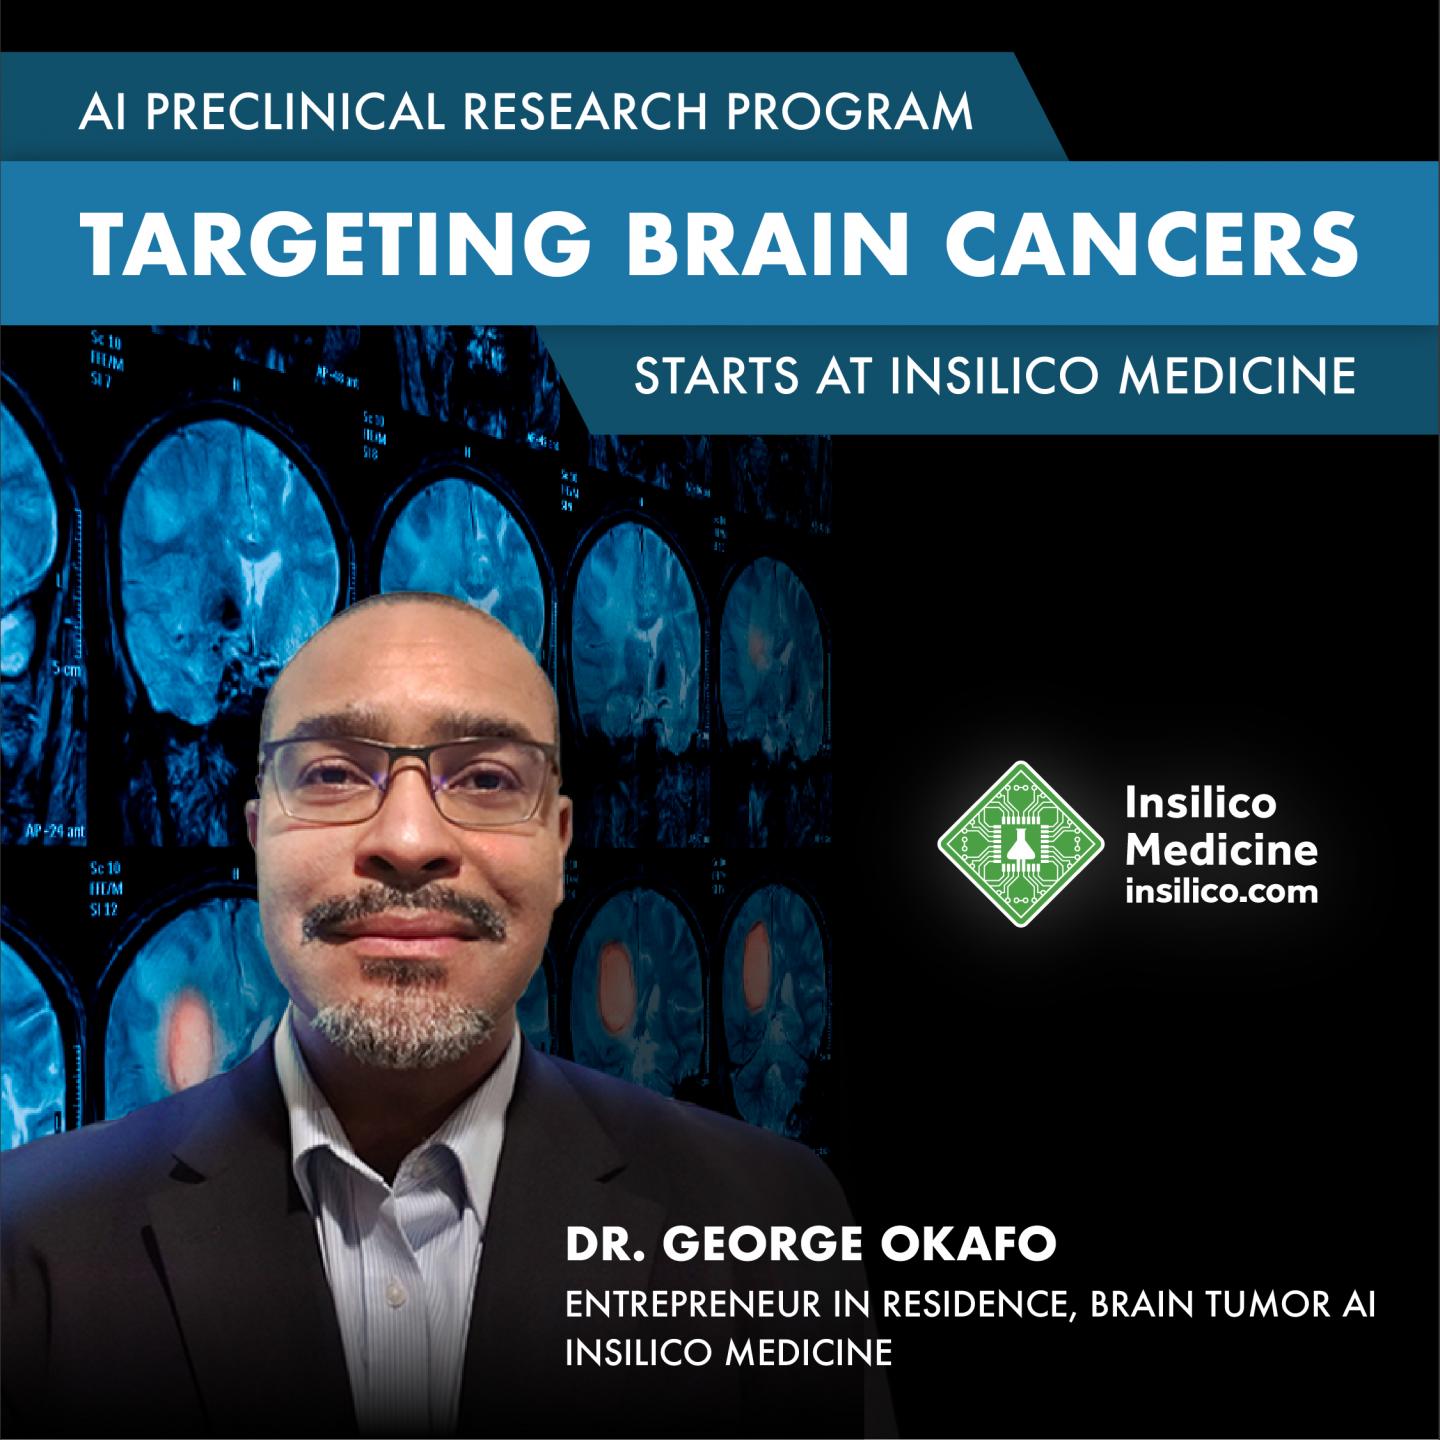 AI Preclinical Research Program Targeting Brain Cancers Starts at Insilico Medicine